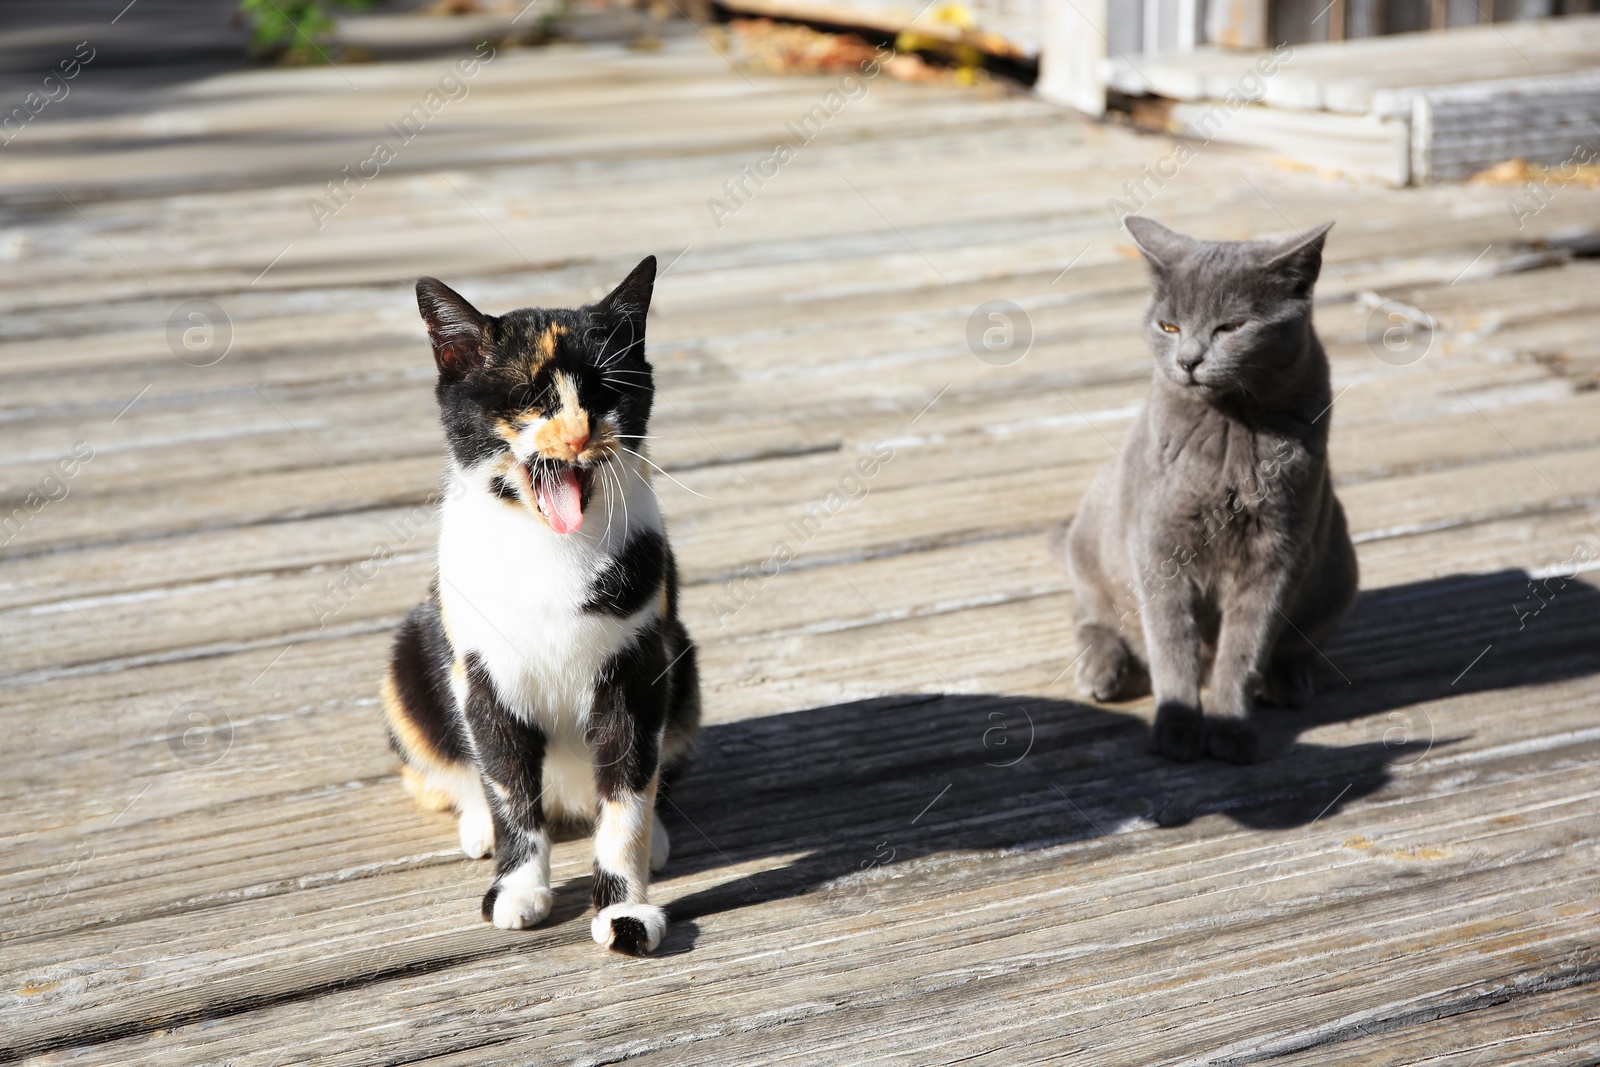 Photo of Stray cats outdoors on sunny day. Homeless animals